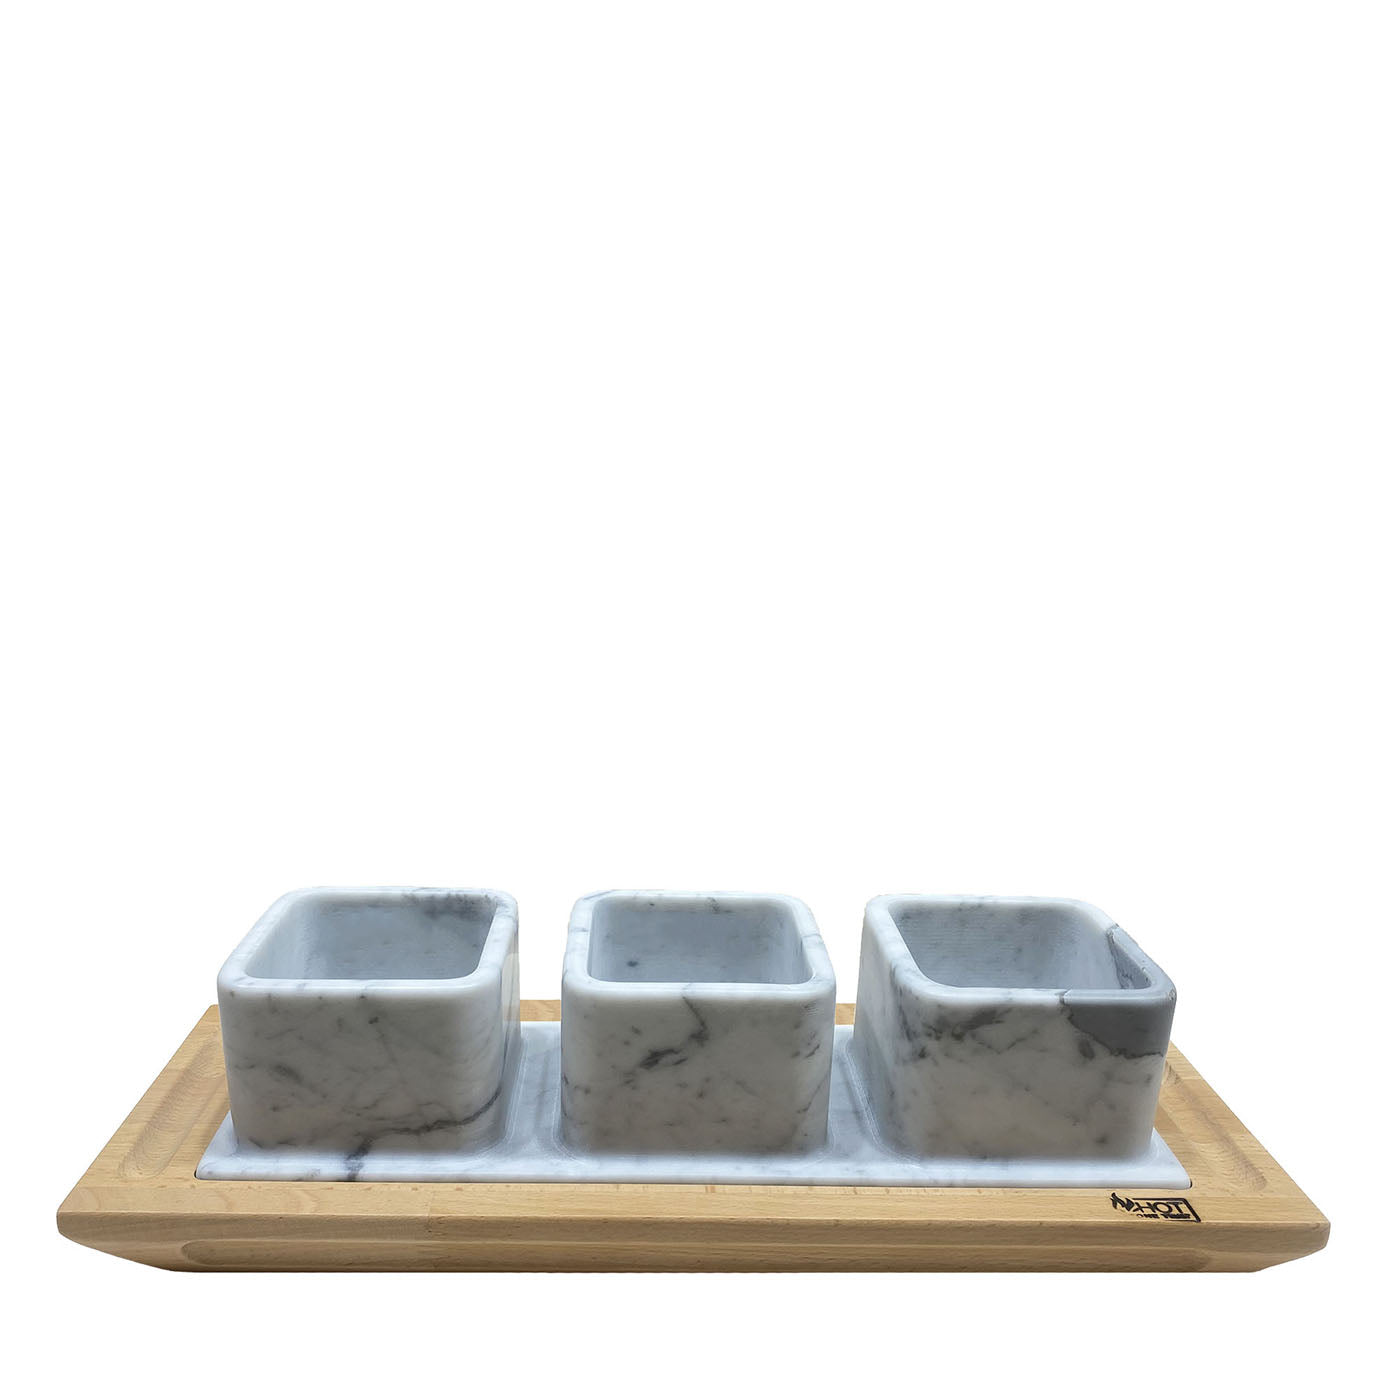 Carrara-Aperitif-Tablett mit 3 Fächern und Holzsockel #1 - Hauptansicht